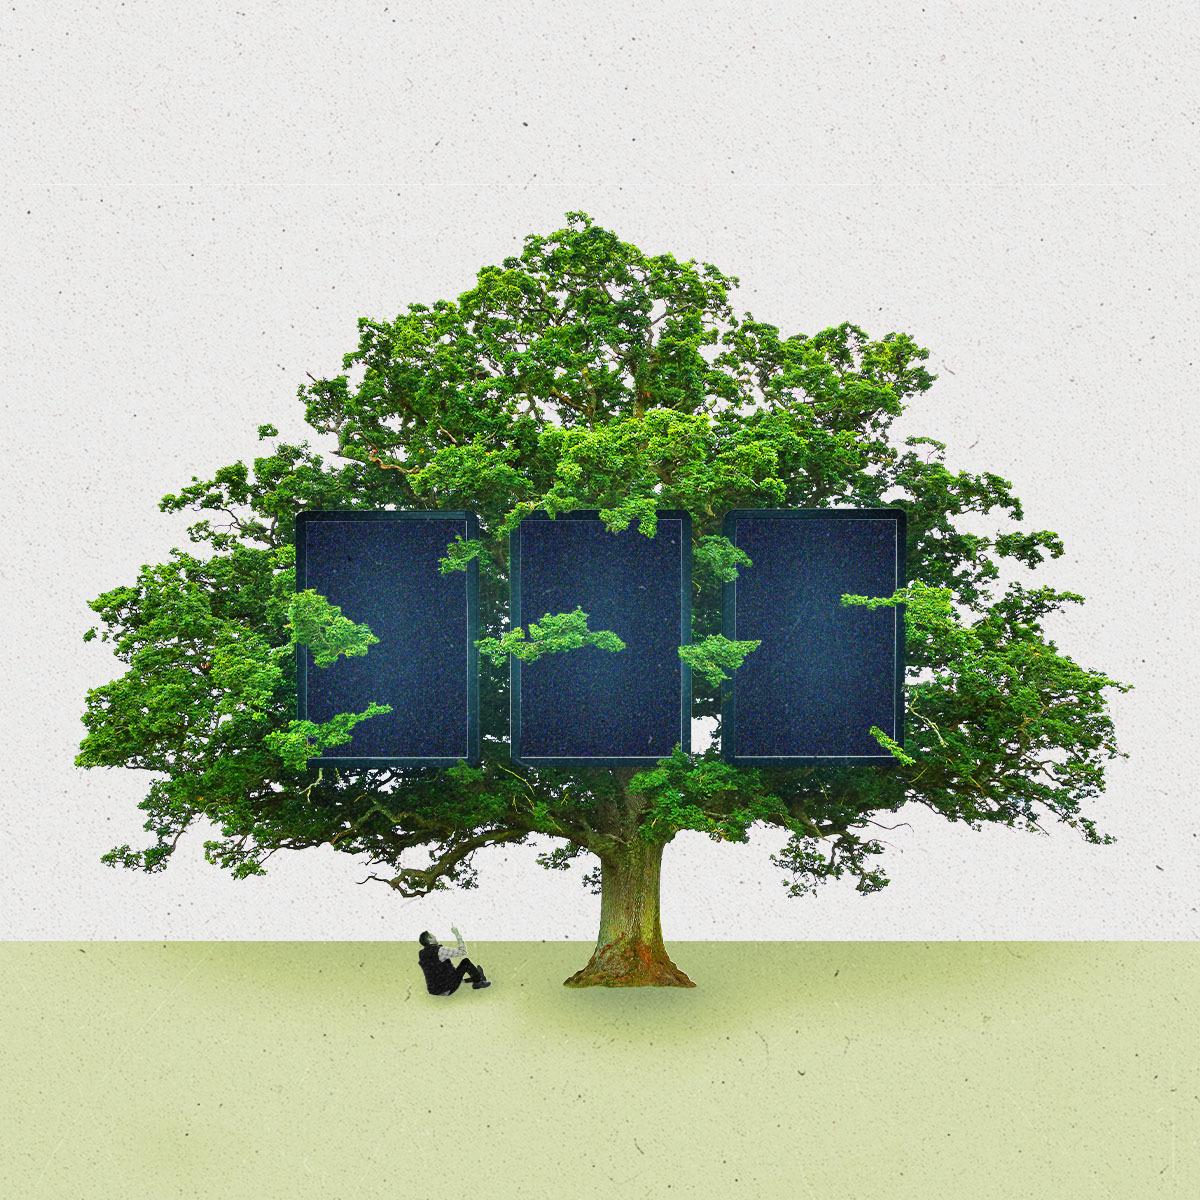 Figure sitting below an oak tree with three digital billboards within it.